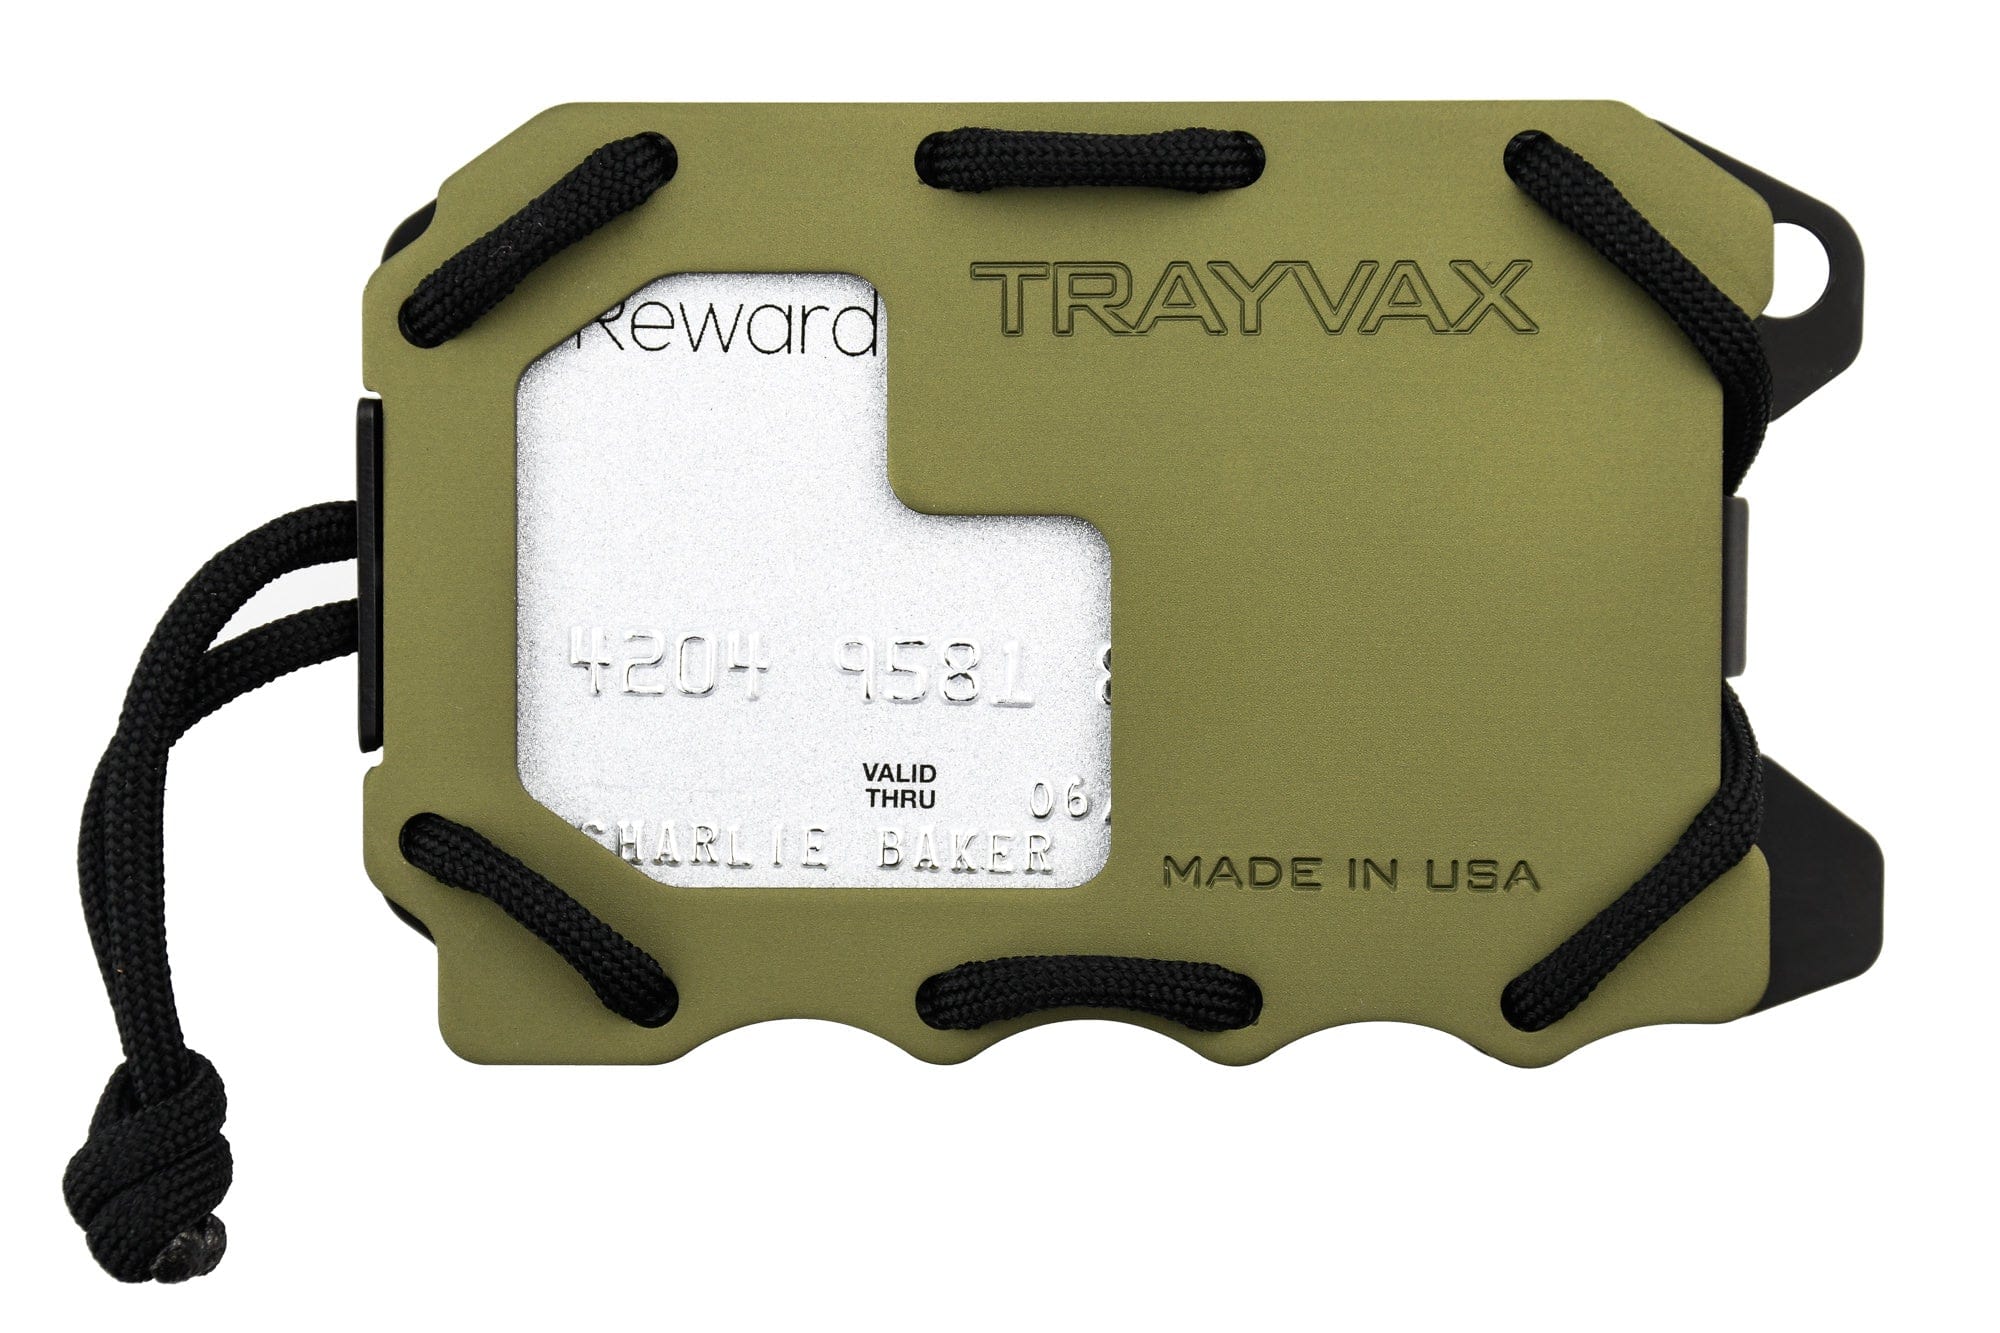 Trayvax Enterprises Wallet OD Green - Seconds Seconds | Original 2.0 Wallet